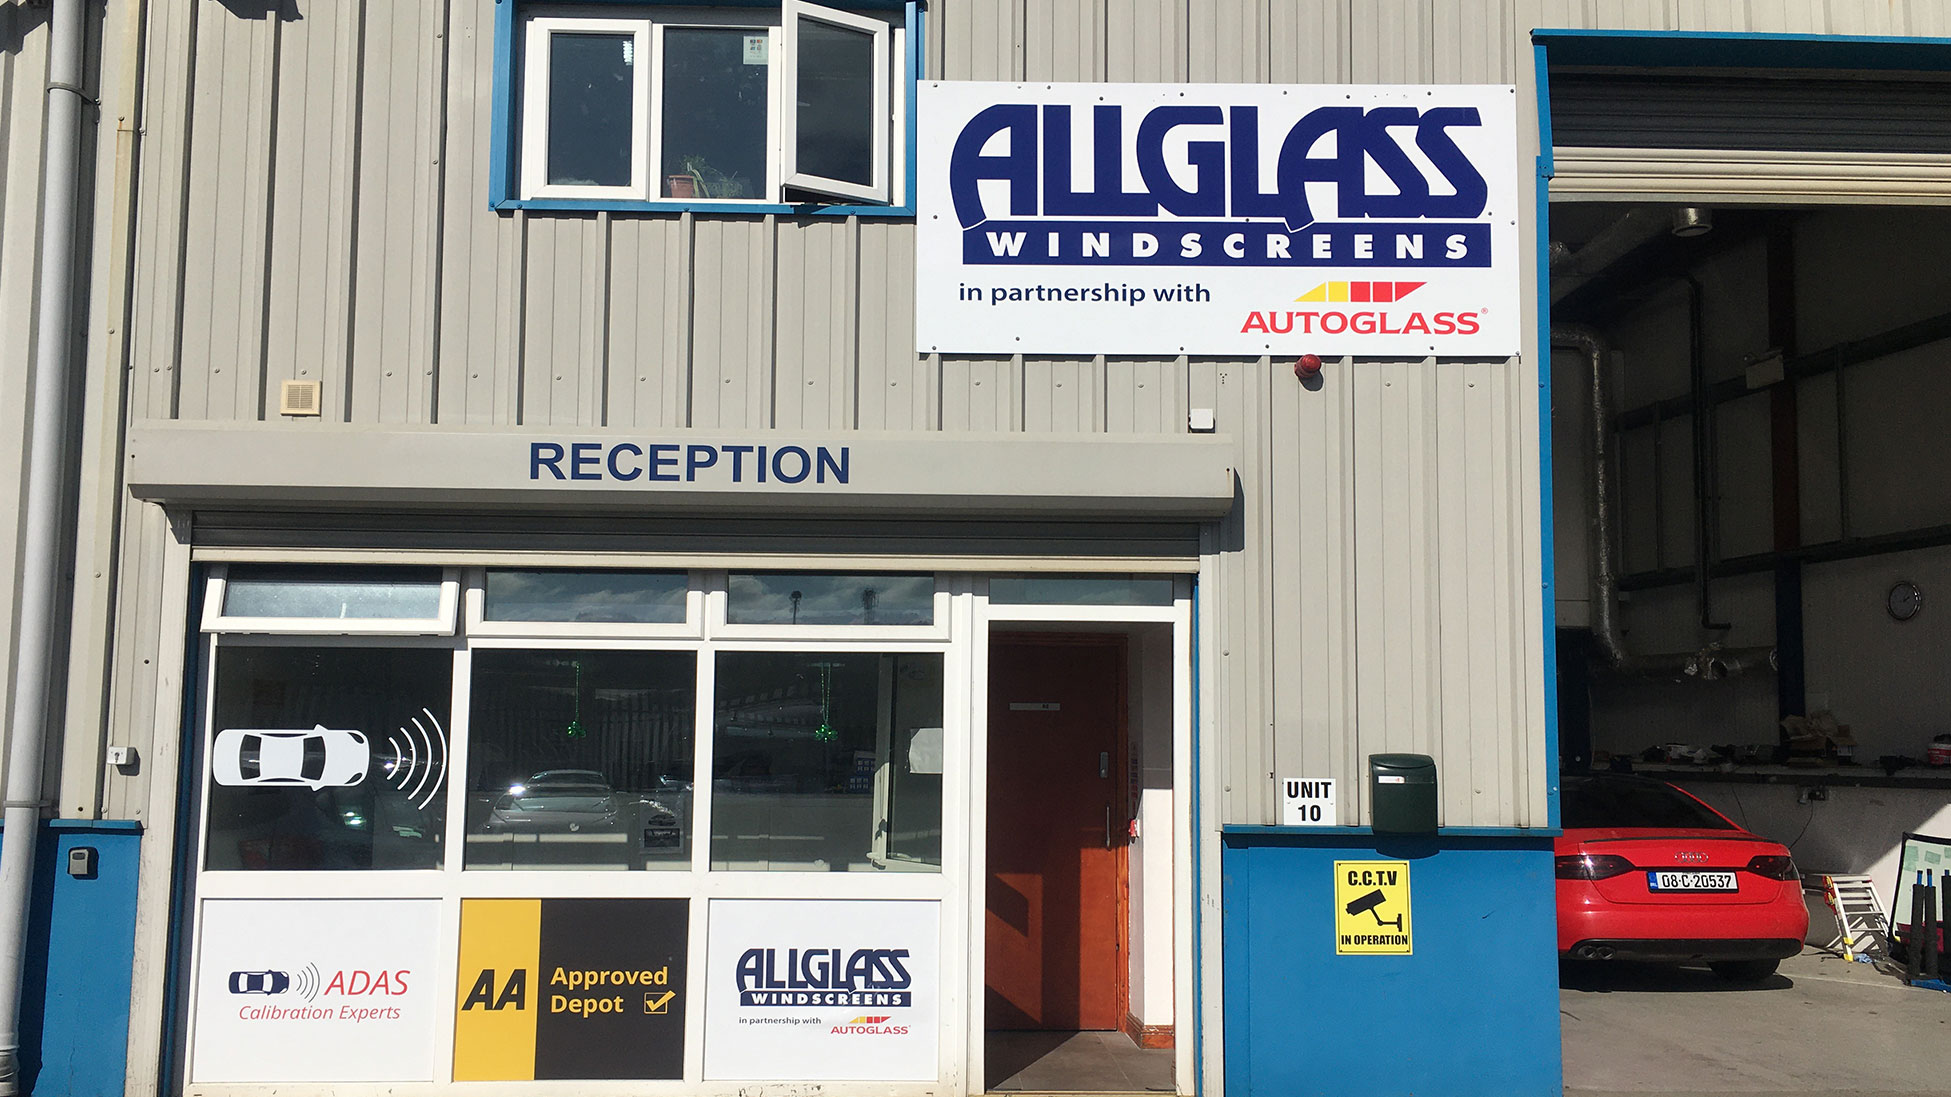 Allglass in partnership with Autoglass - Cork